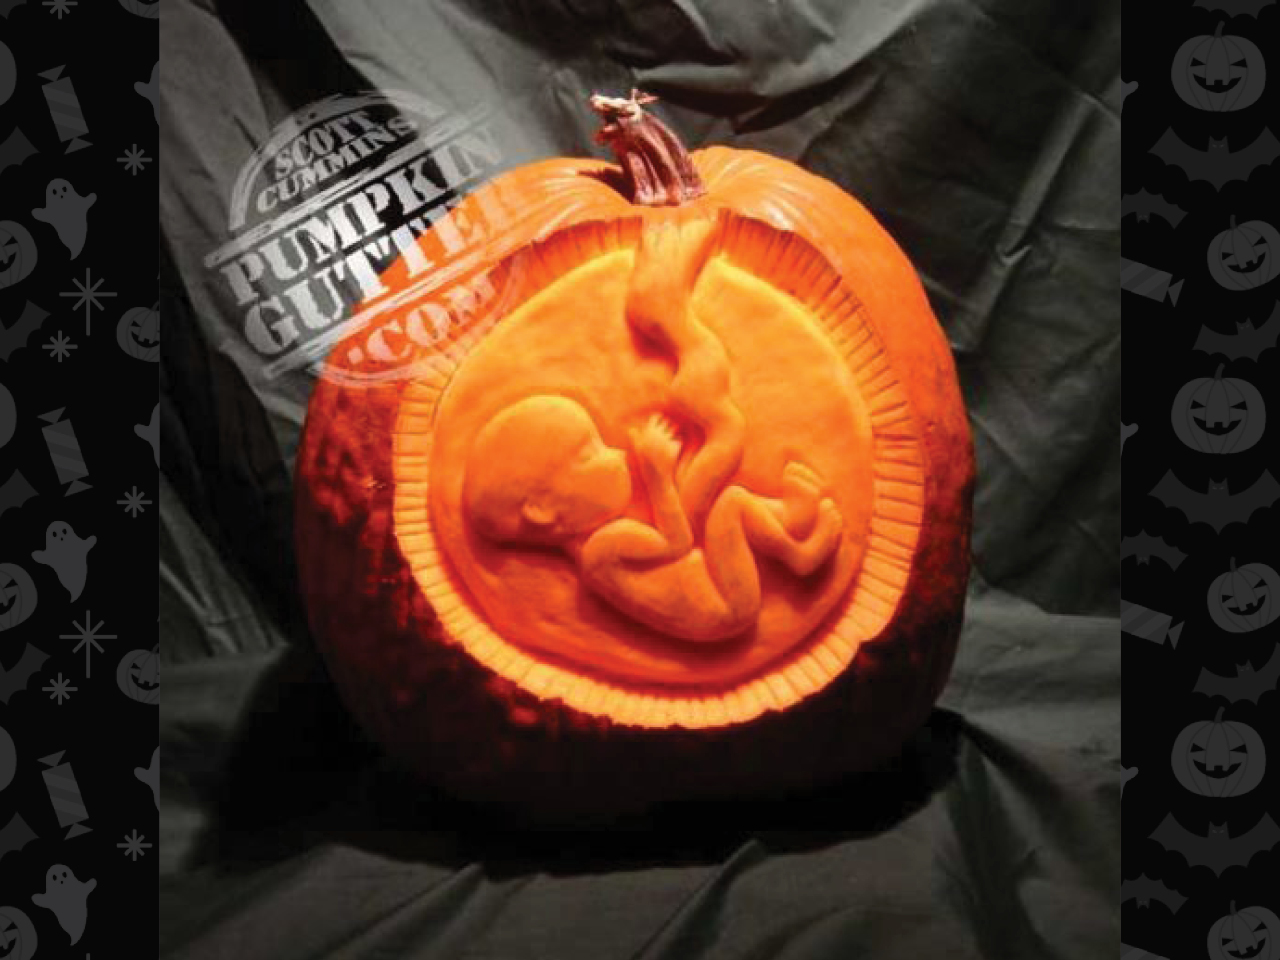 carving of fetus on pumpkin